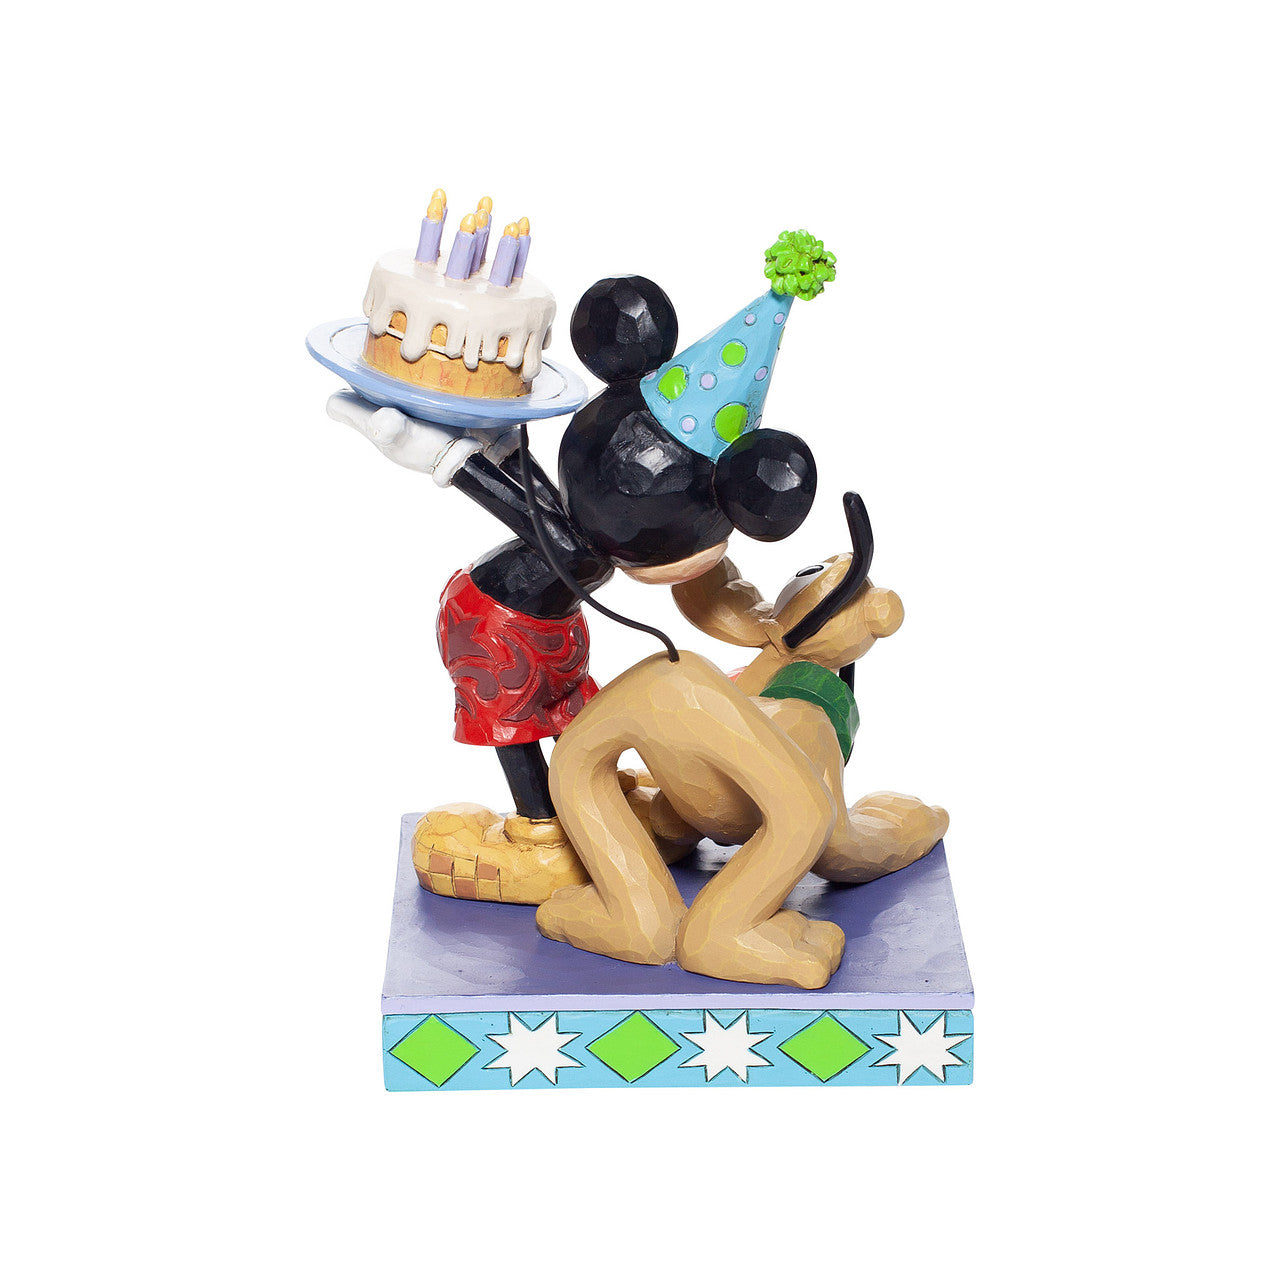 Happy Birthday Pal - Pluto and Mickey Birthday Cake